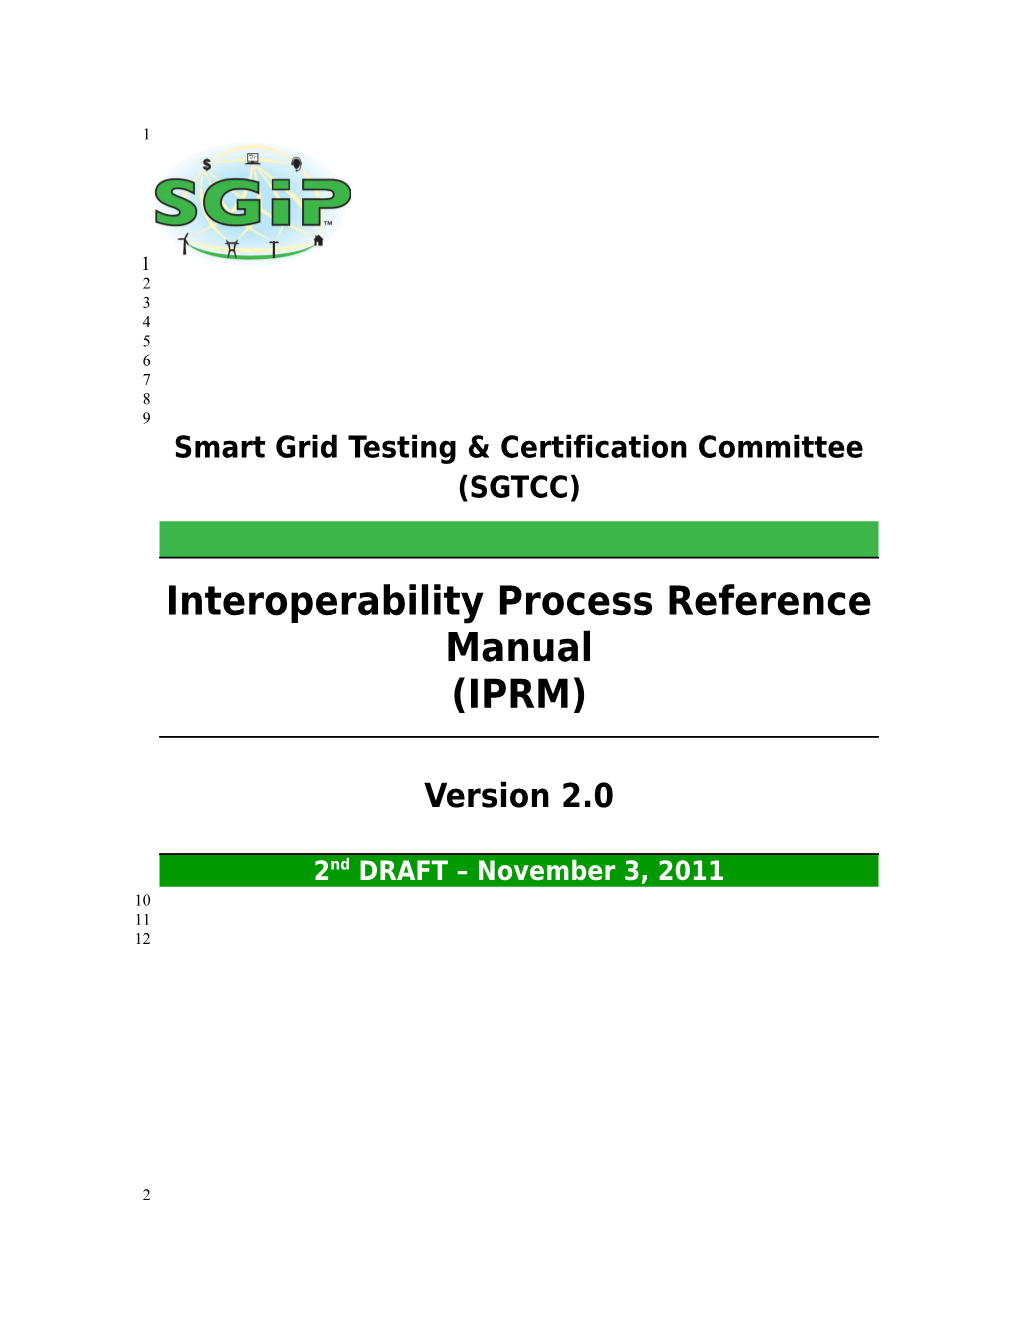 Interoperability Process Reference Manual